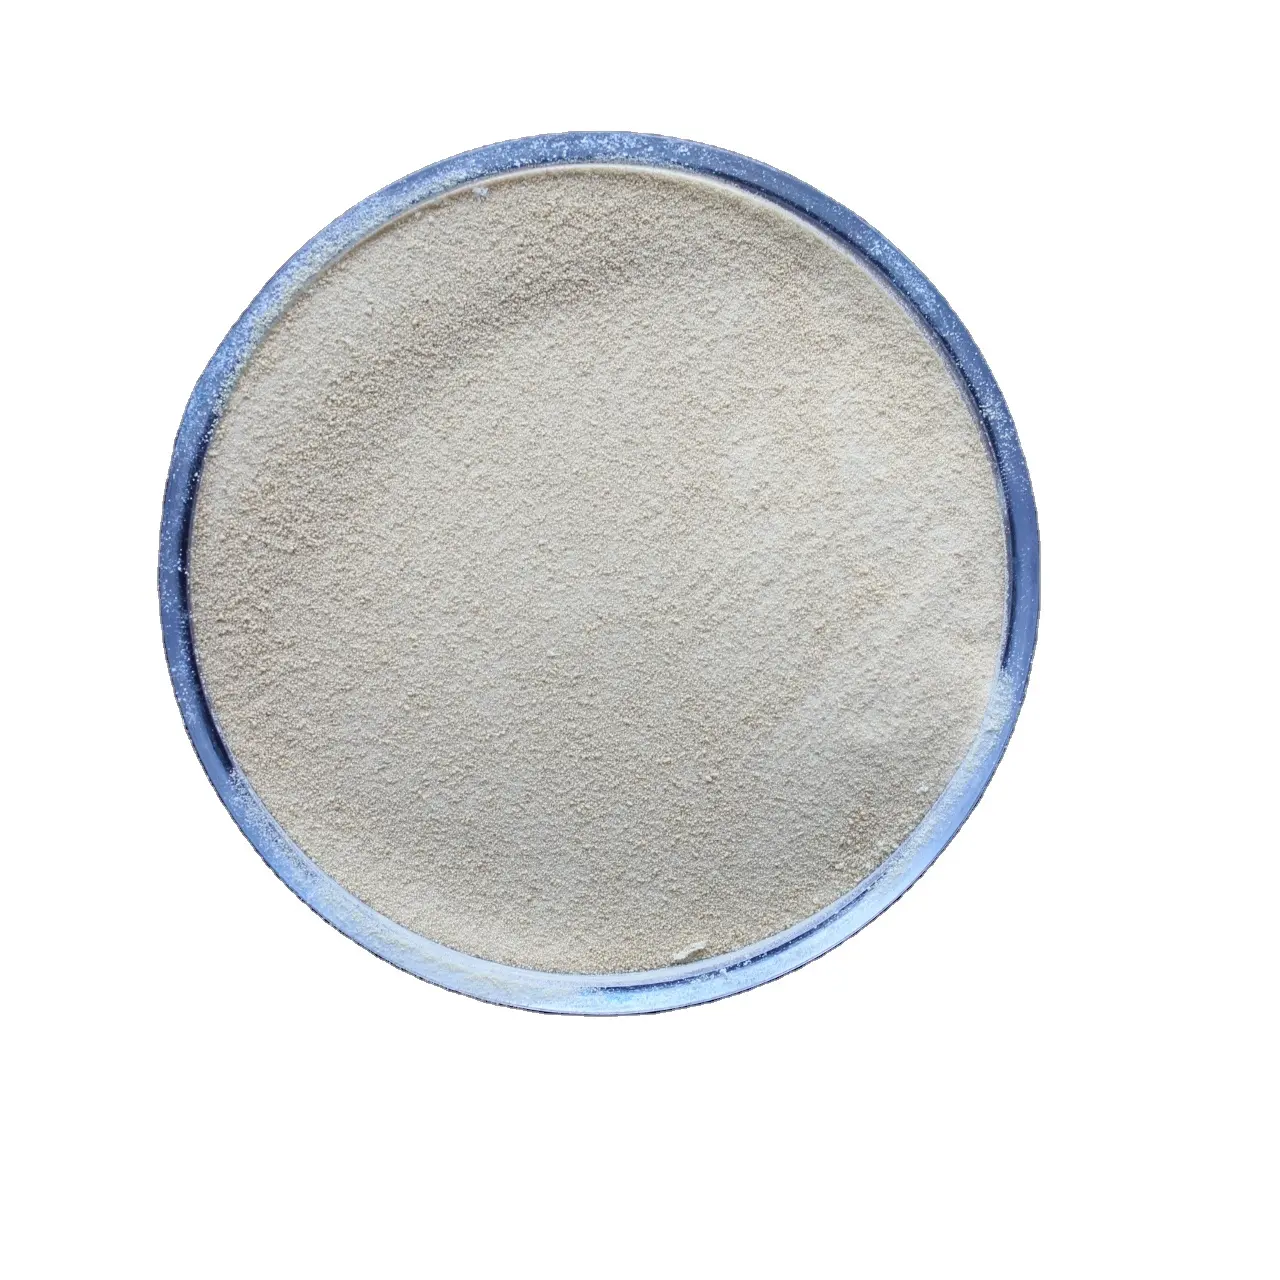 Sodium formate sodium salt of formic acid, HCOOH white deliquescent powder